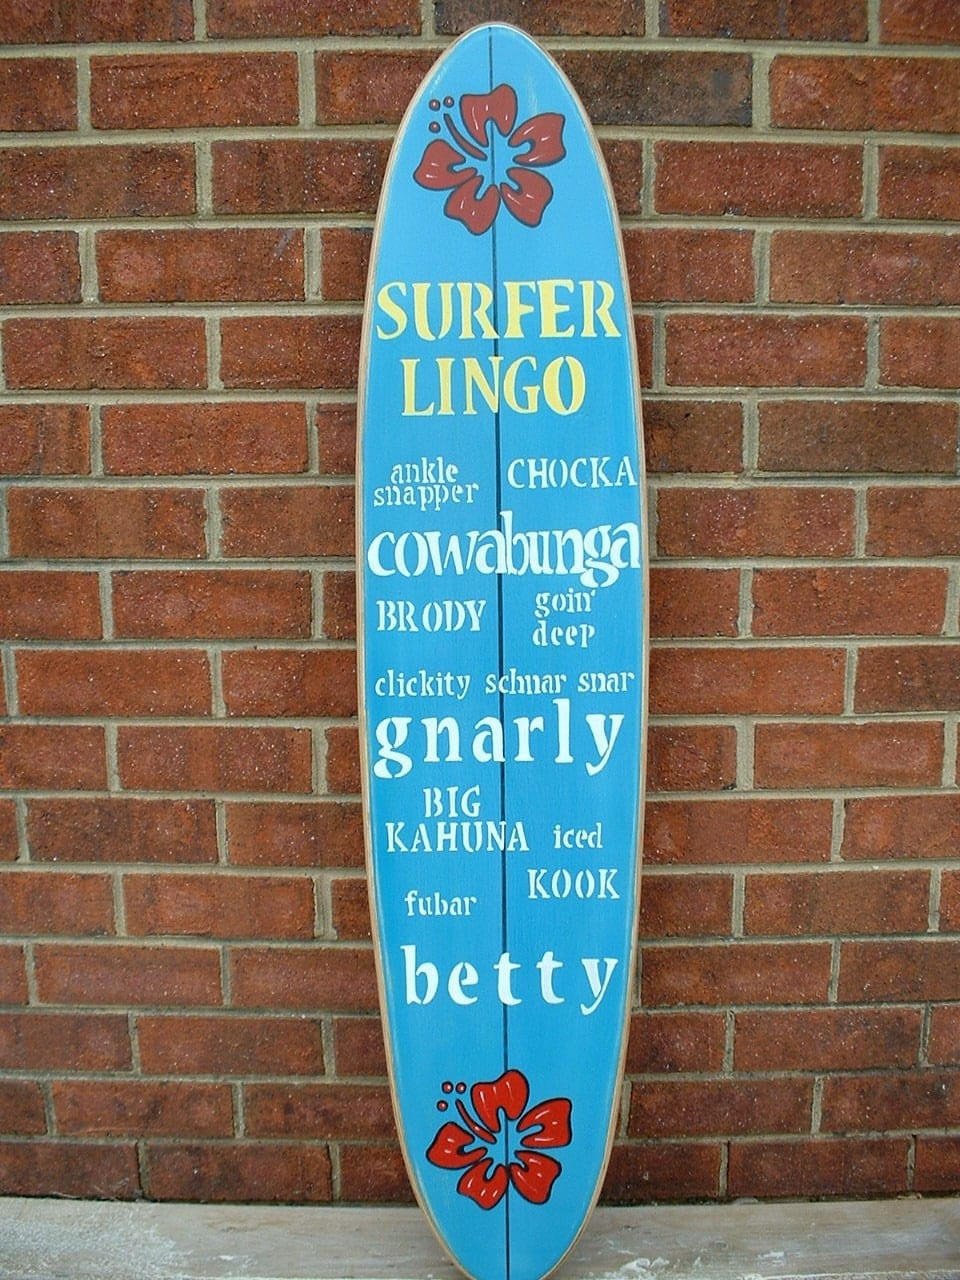 surfer lingo for hang ten